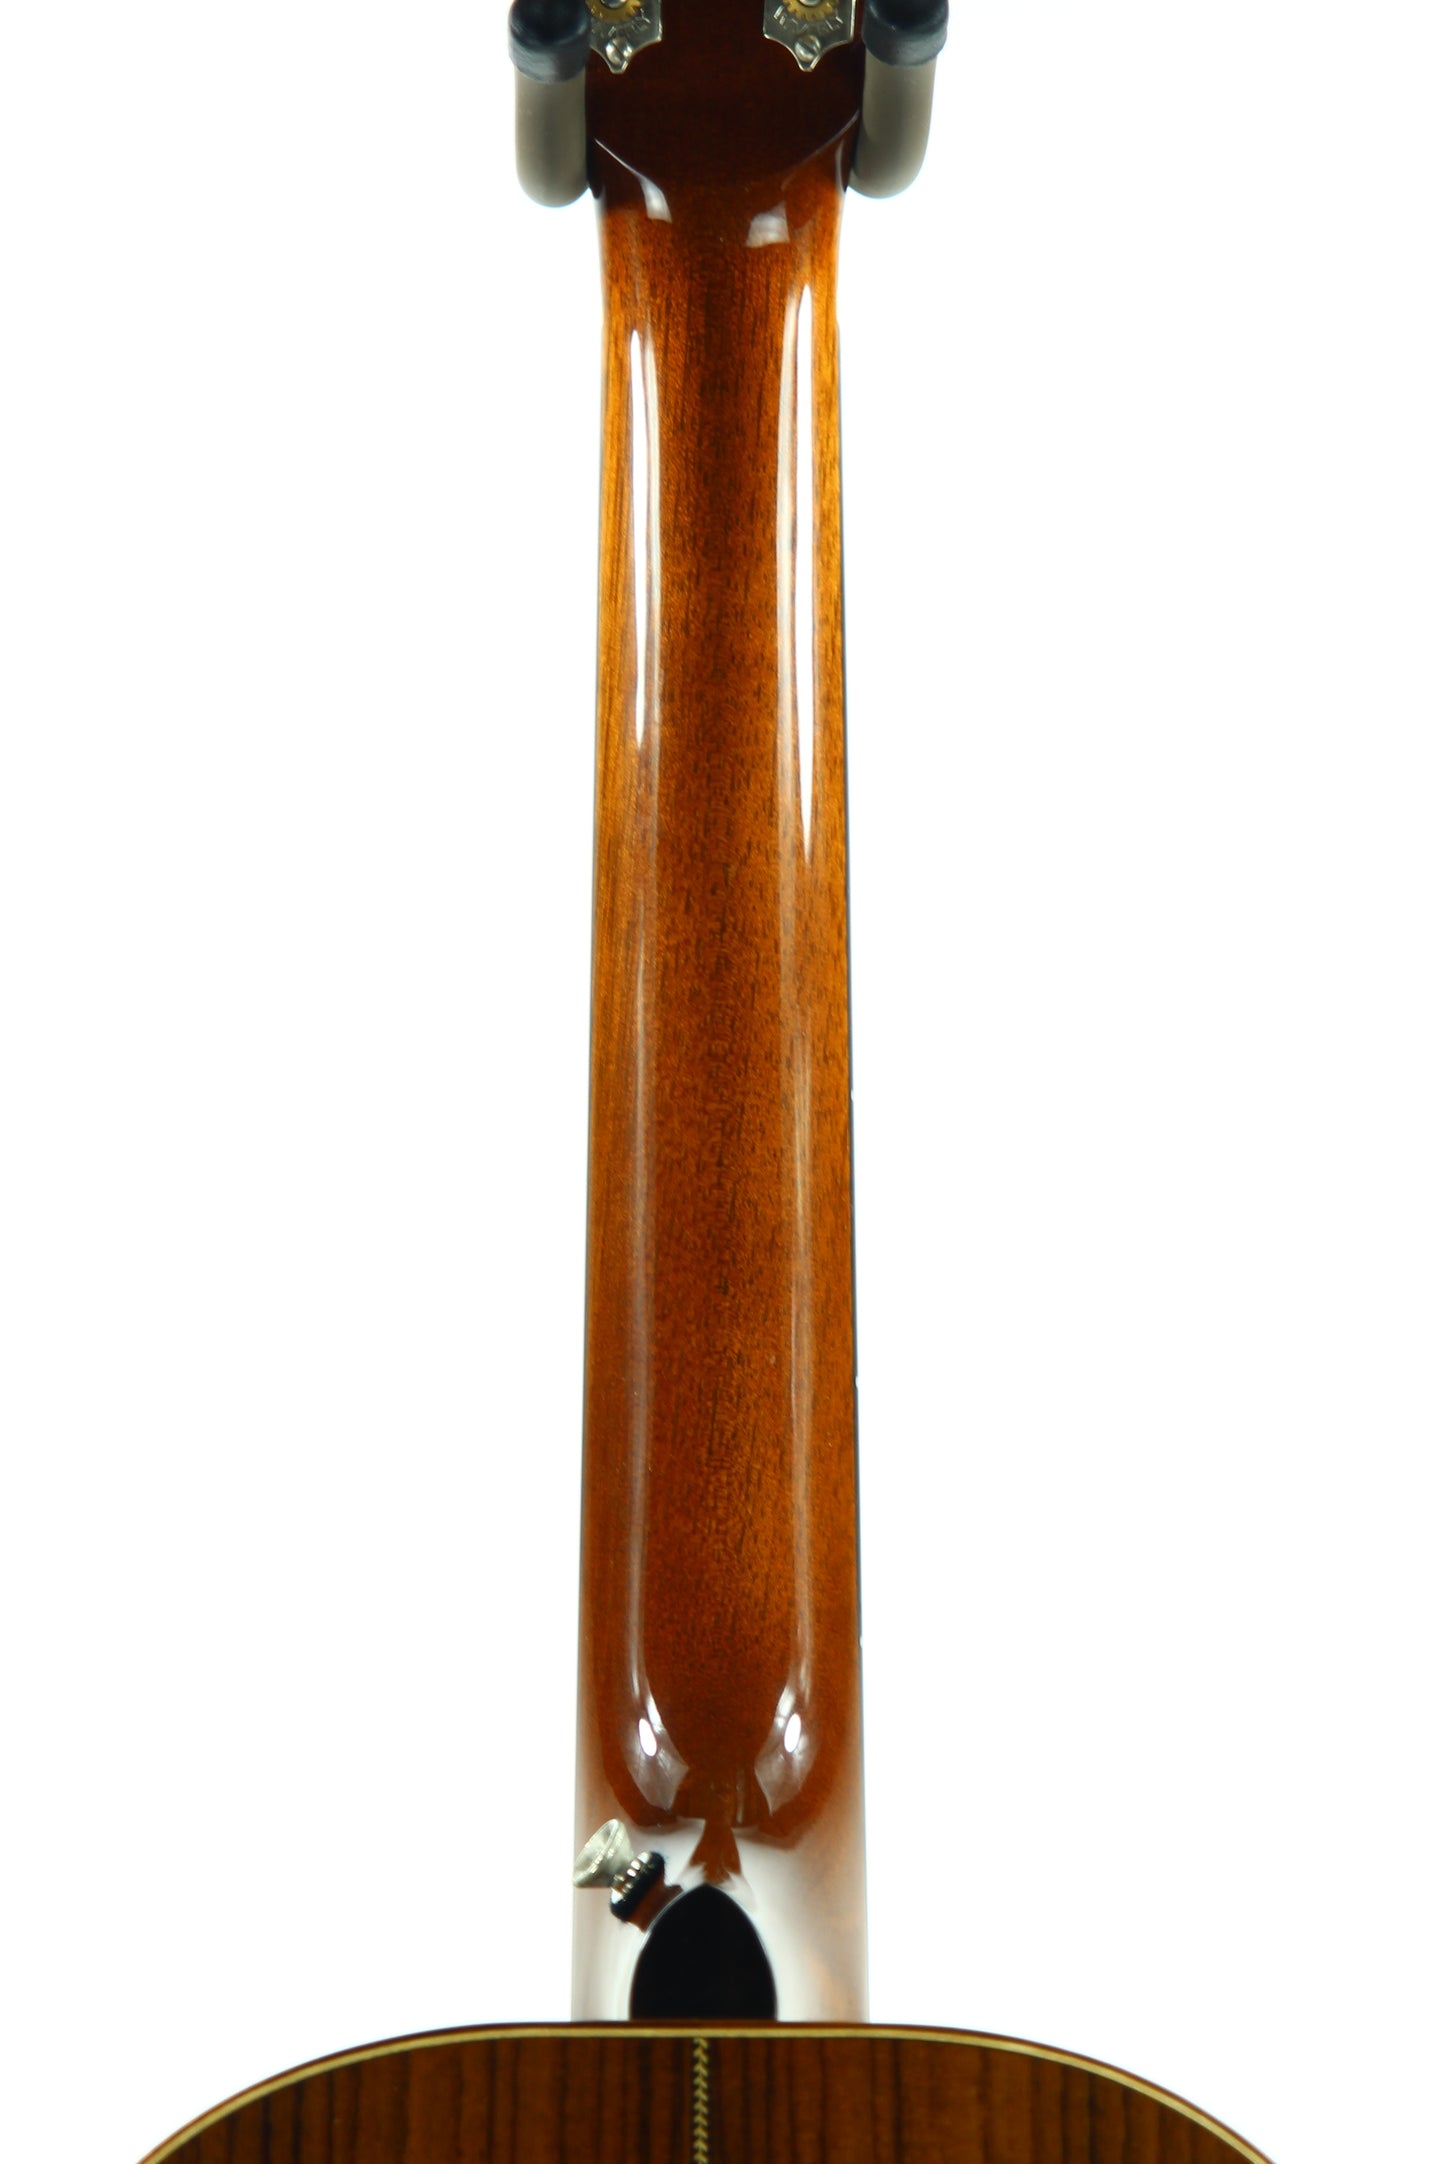 2000 Huss and Dalton OO 00-28 Standard Type - Engelmann Spruce, Rosewood, 1-3/4" Nut, Prewar Feel, Small Body Acoustic!